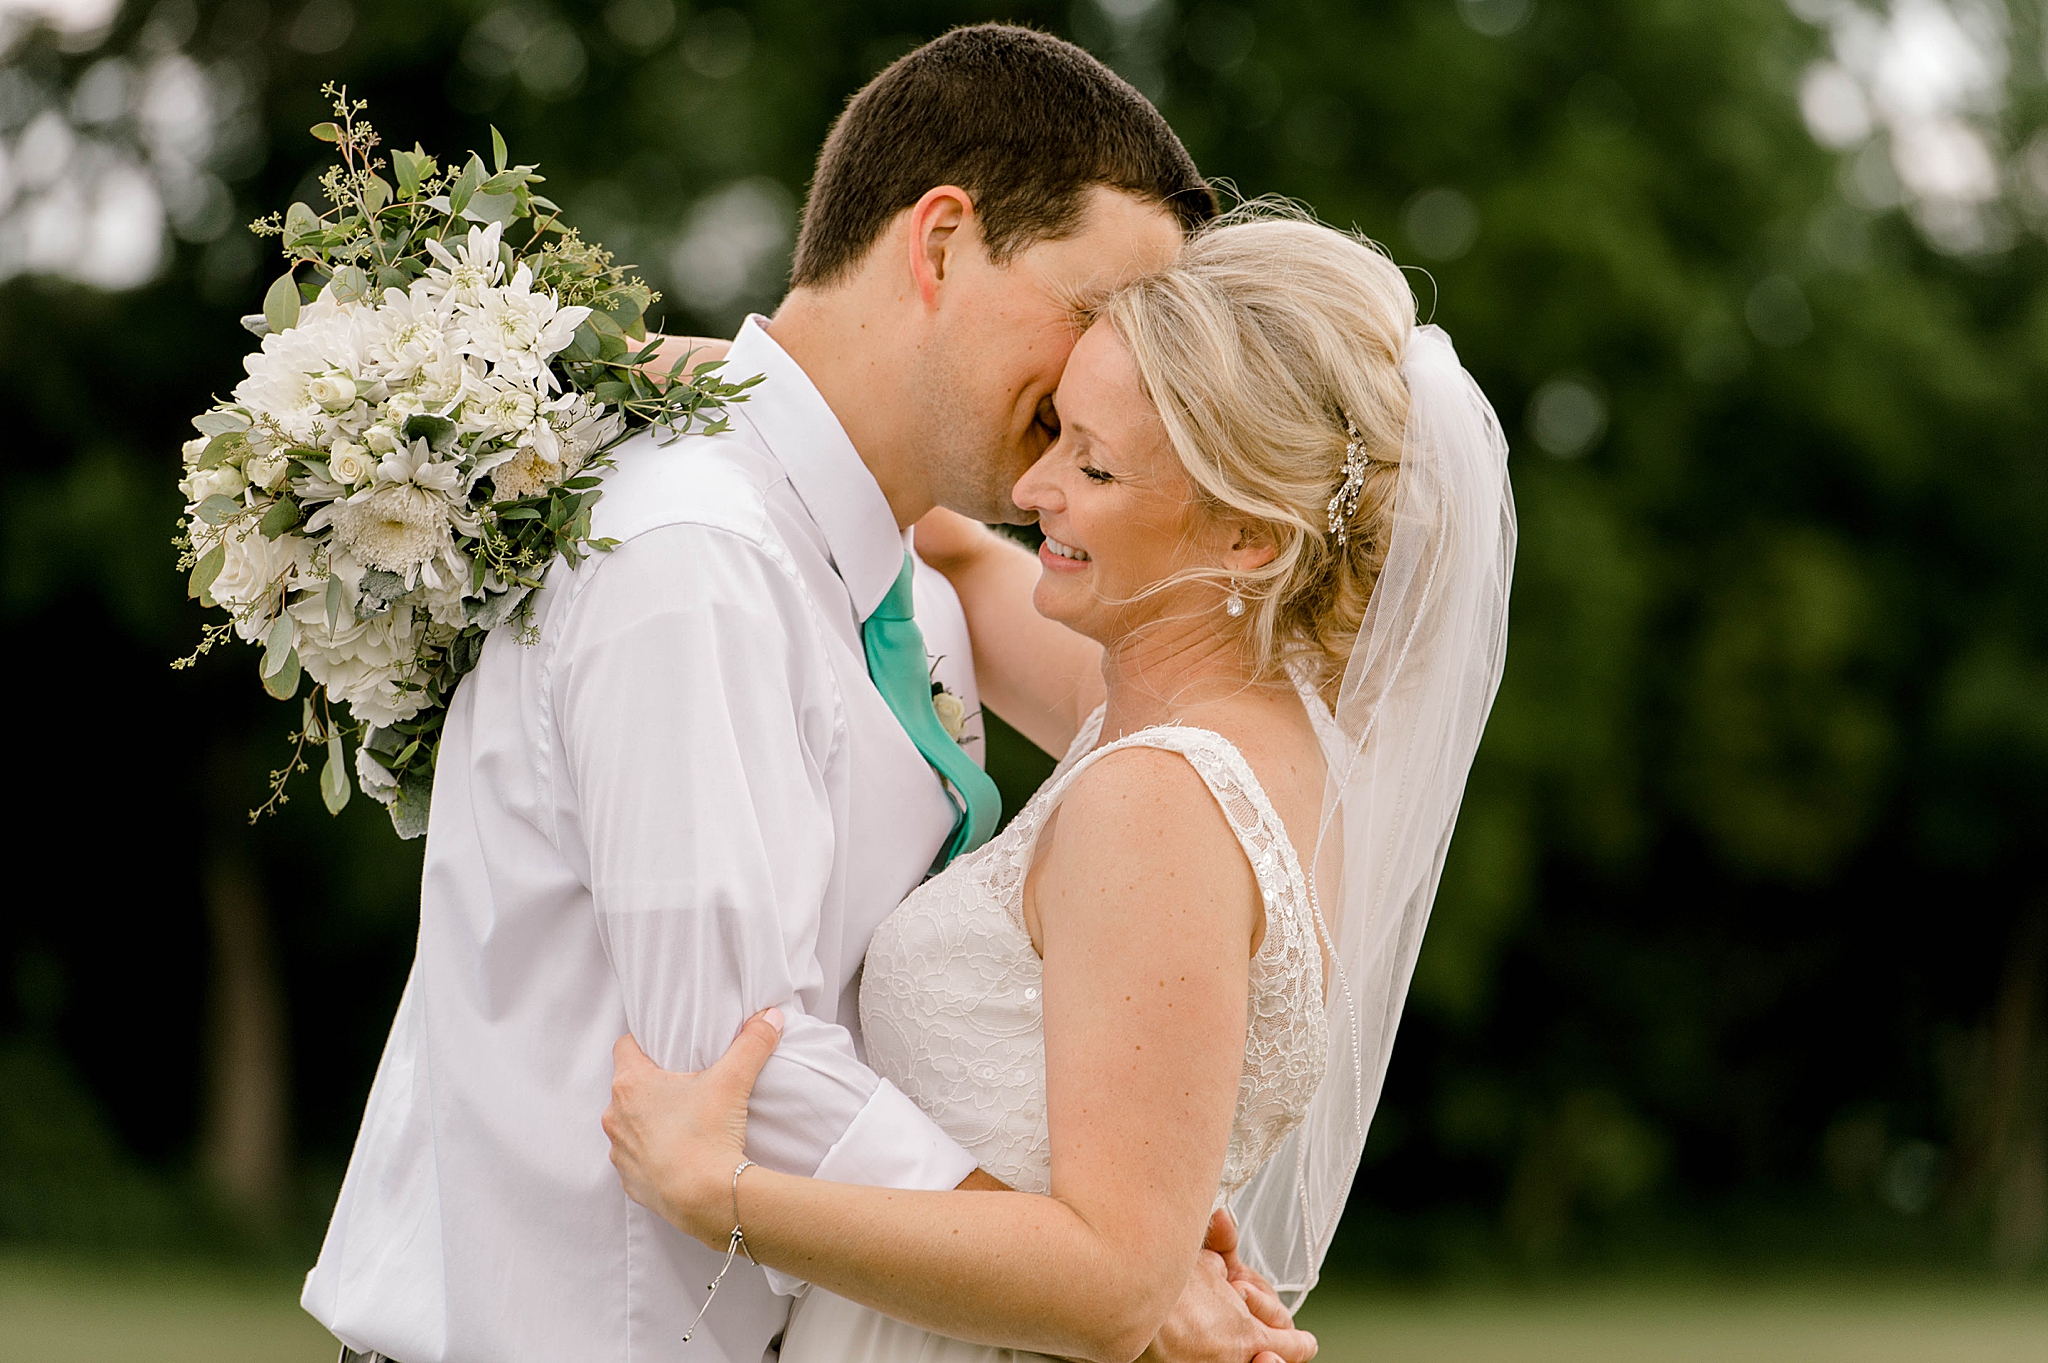 Ohio wedding photographer shares top 5 Toledo Ohio wedding venues